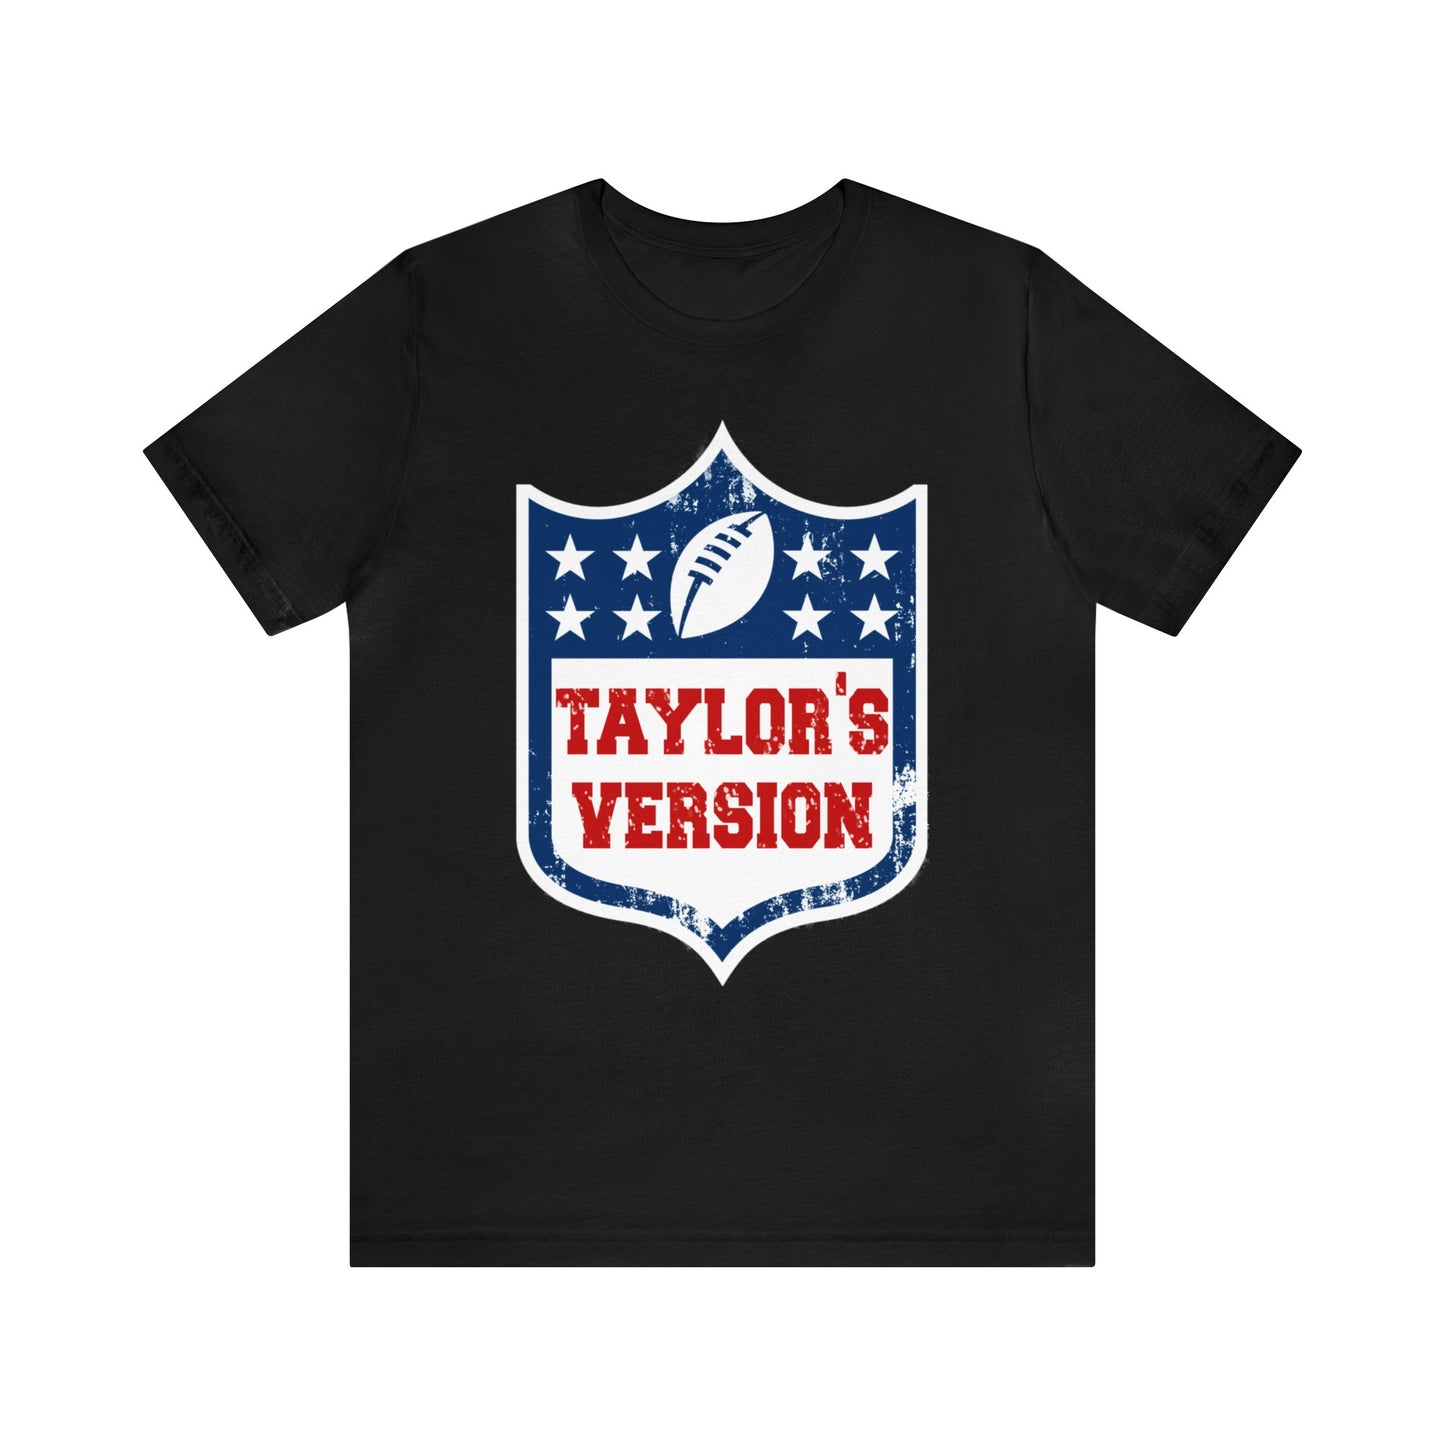 Taylor's Version Tee